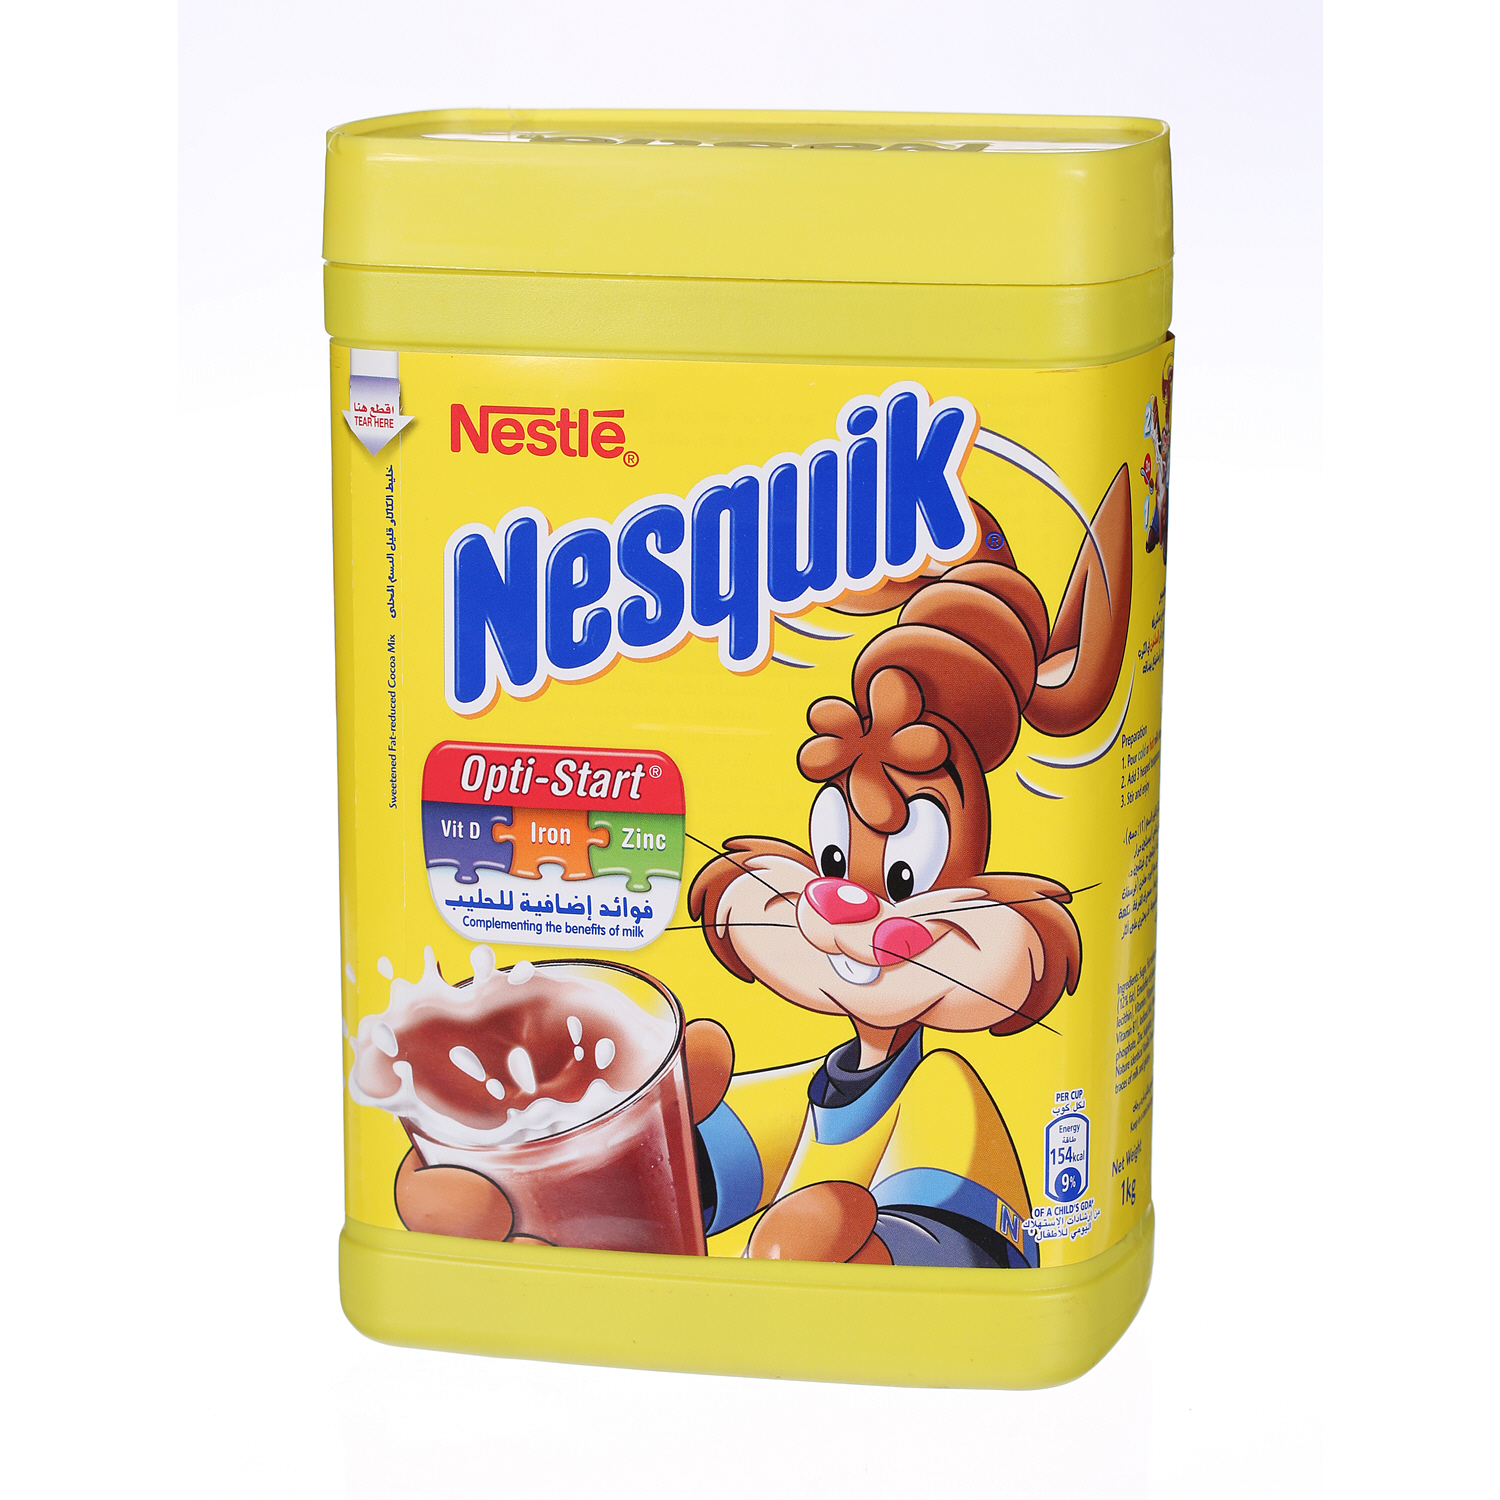 Nestlé Nesquik Choco Drink 1 Kg